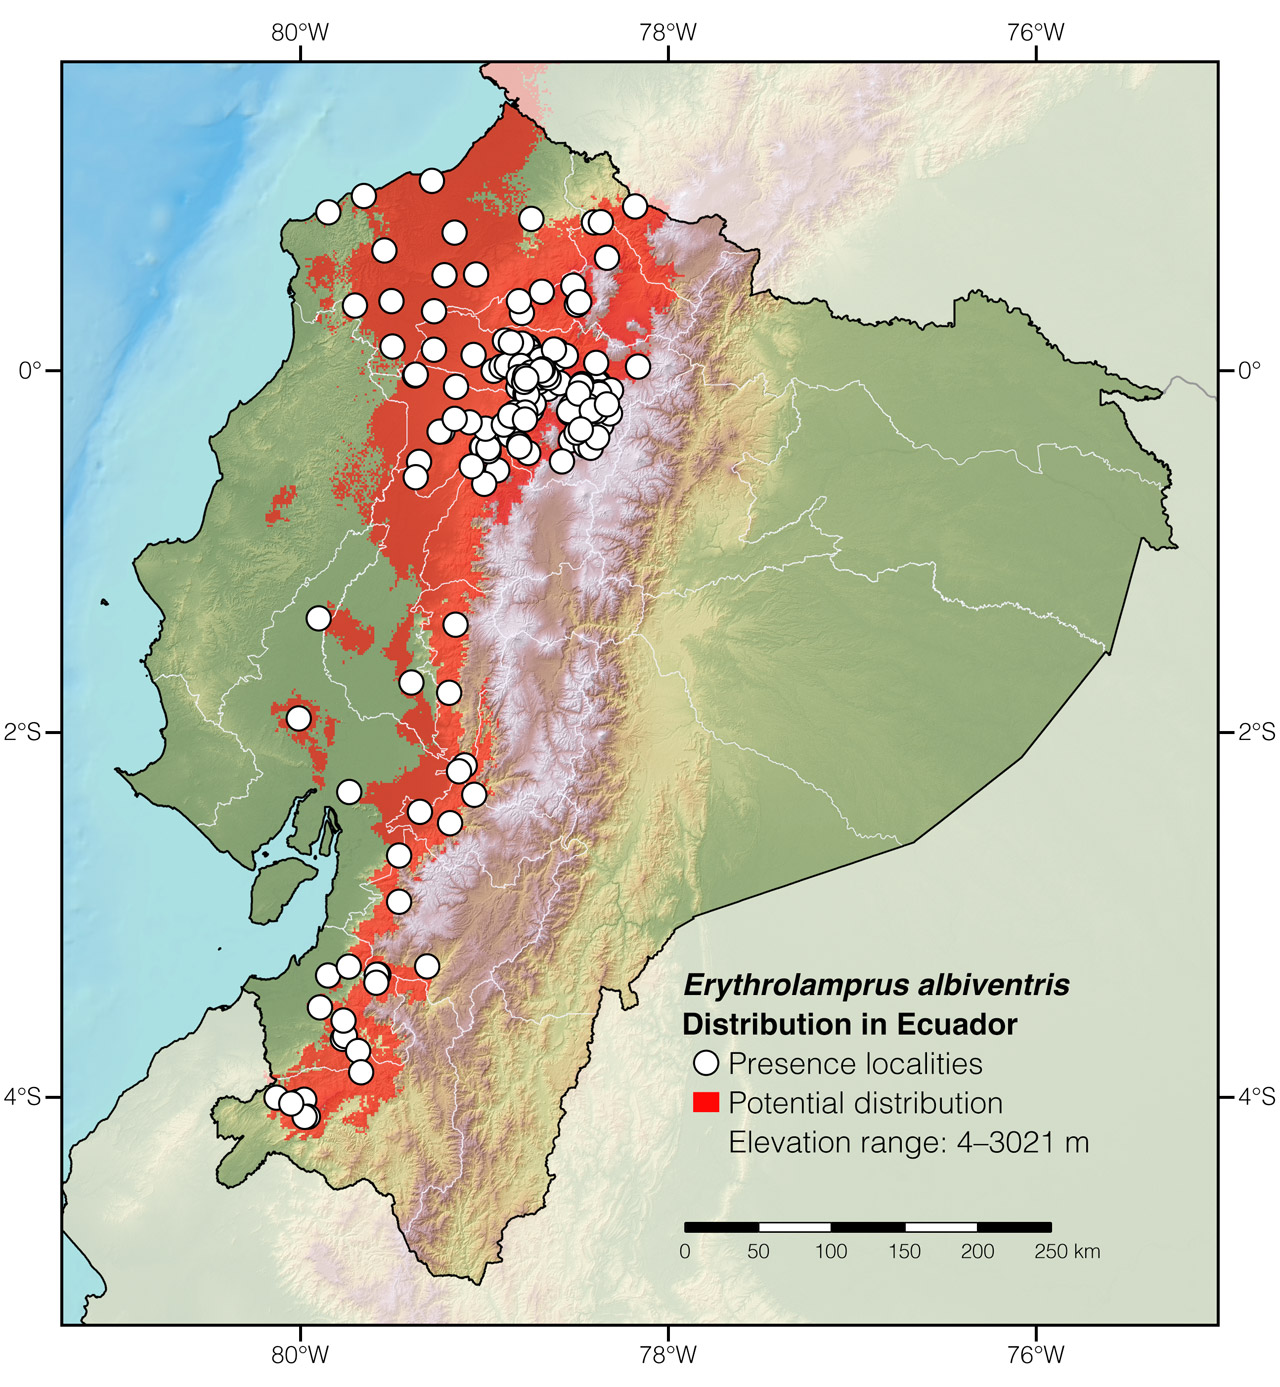 Distribution of Erythrolamprus albiventris in Ecuador